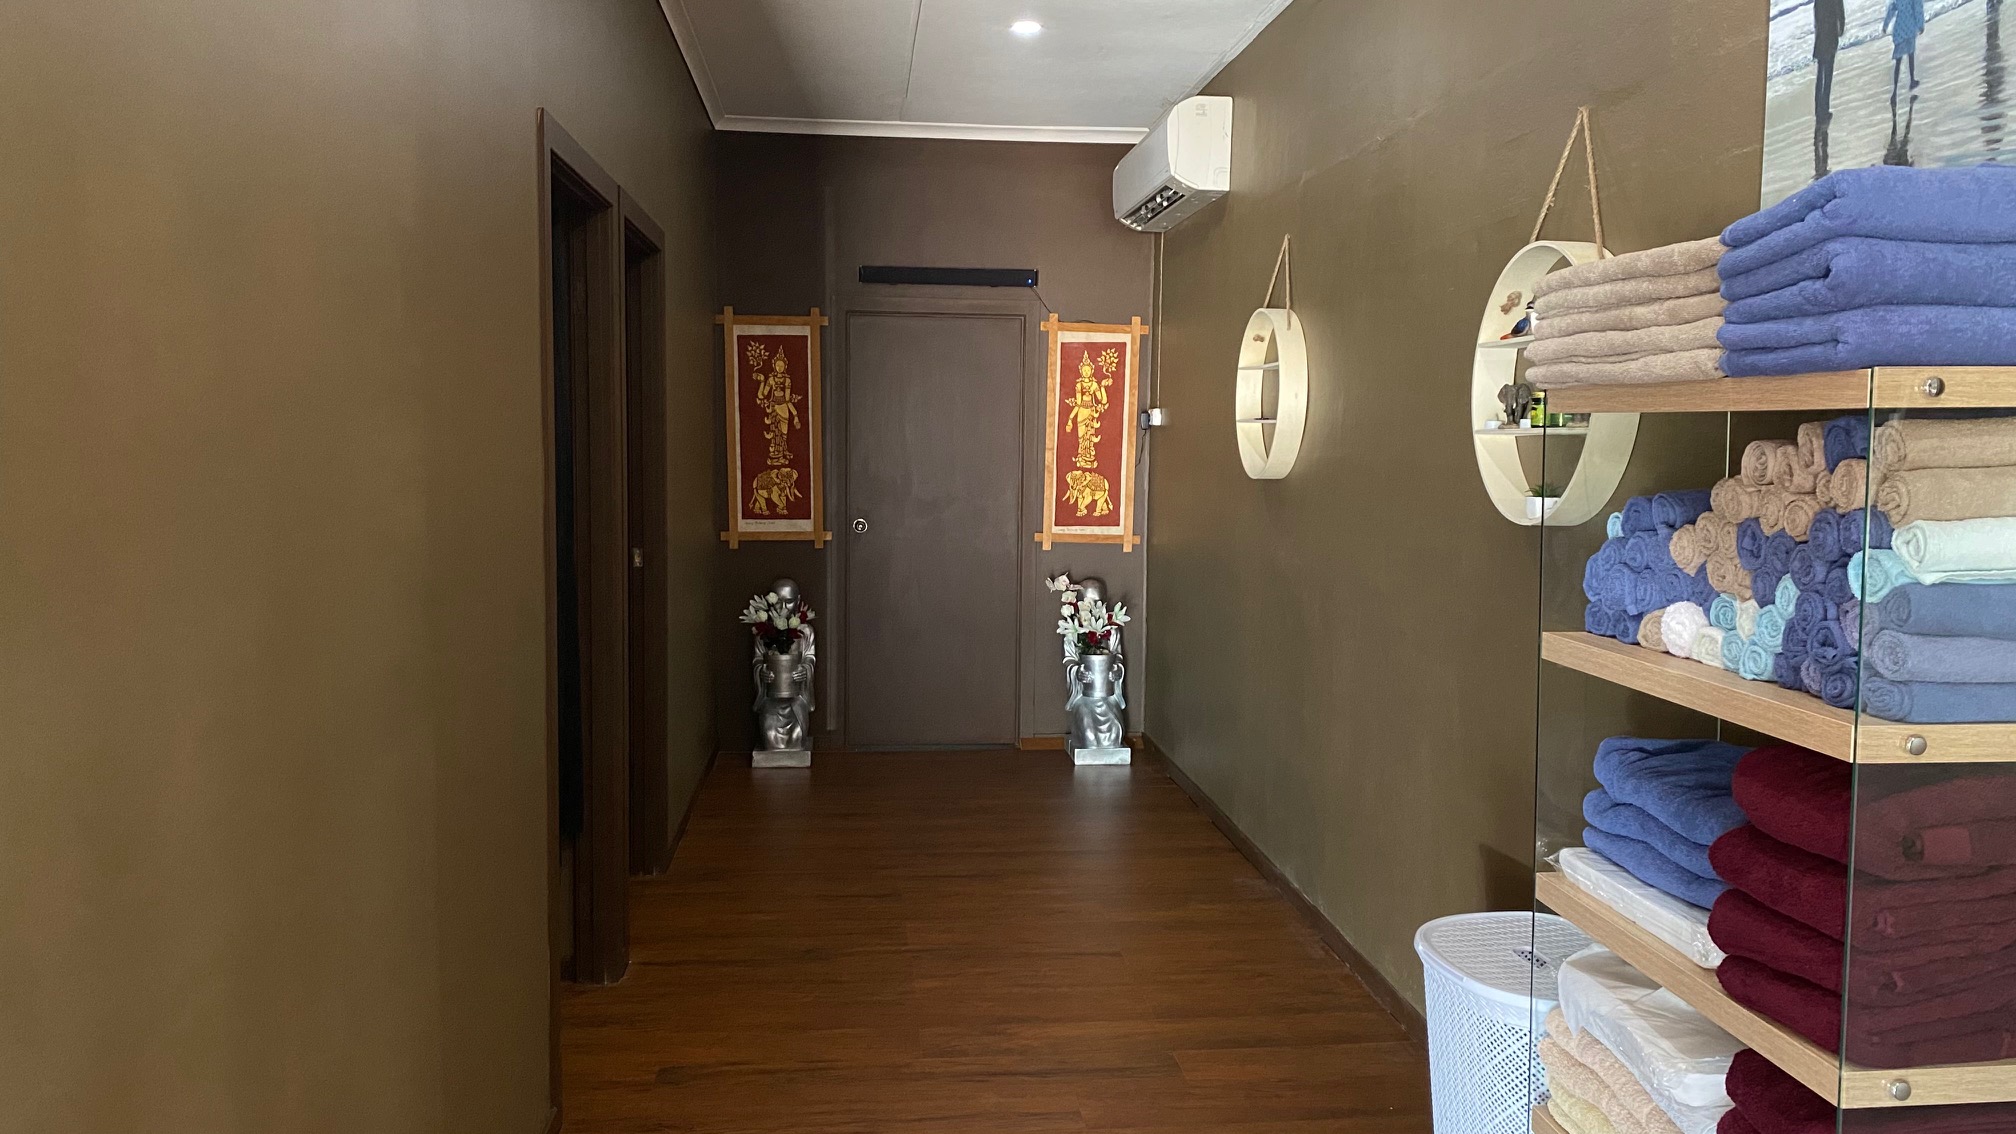 Gallery Thai Sensations Massage Hervey Bay Qld